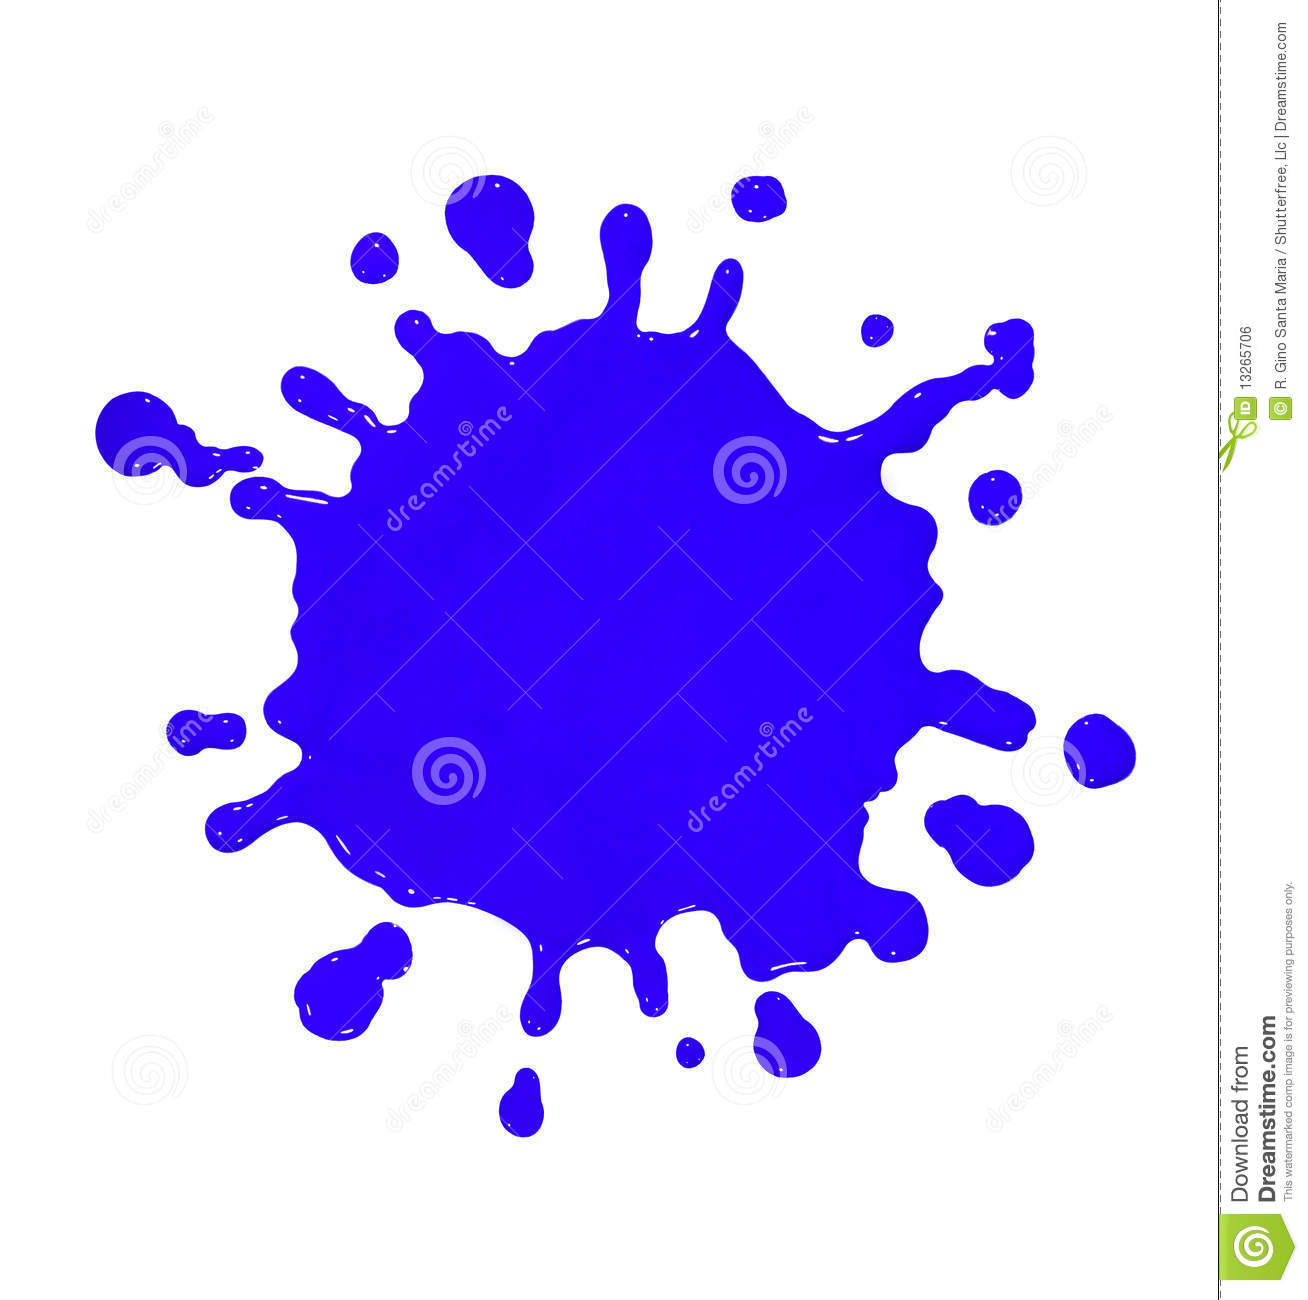 Blue Paint Splat Royalty Free Stock Image   Image  13265706